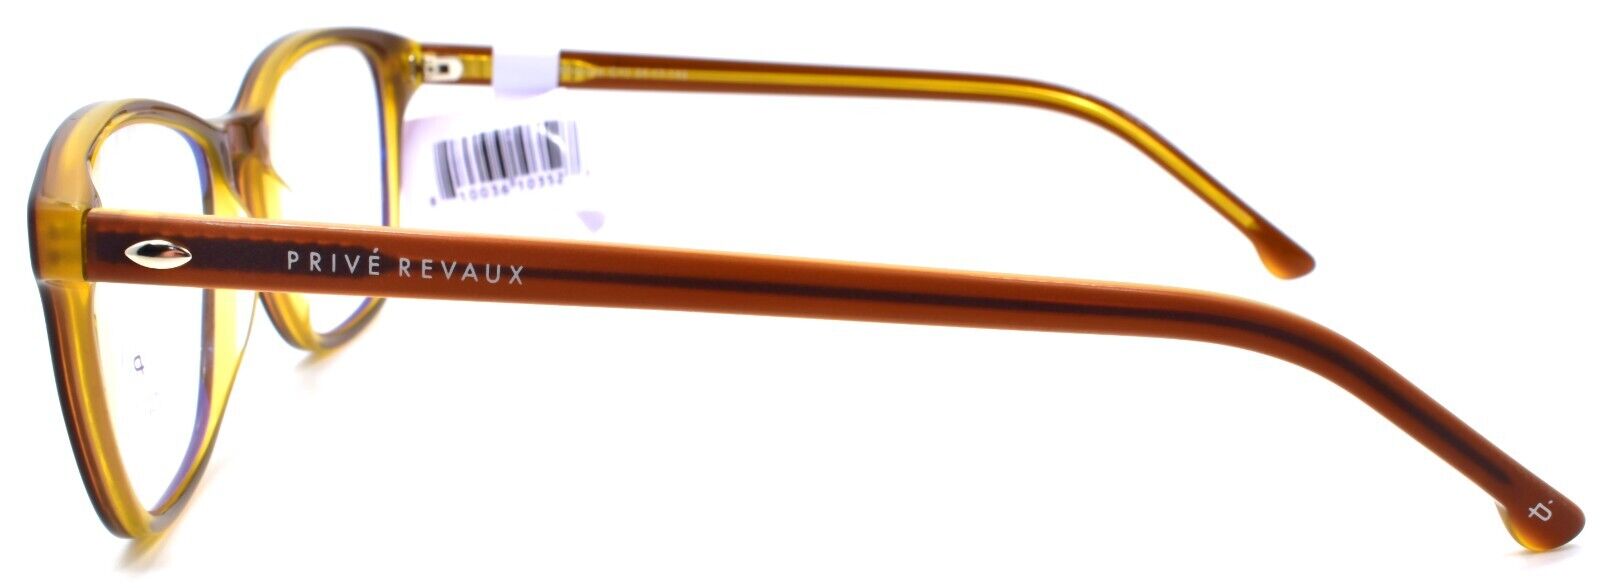 3-Prive Revaux Shielded Eyeglasses Blue Light Blocking RX-ready Chestnut / Brown-810036103527-IKSpecs